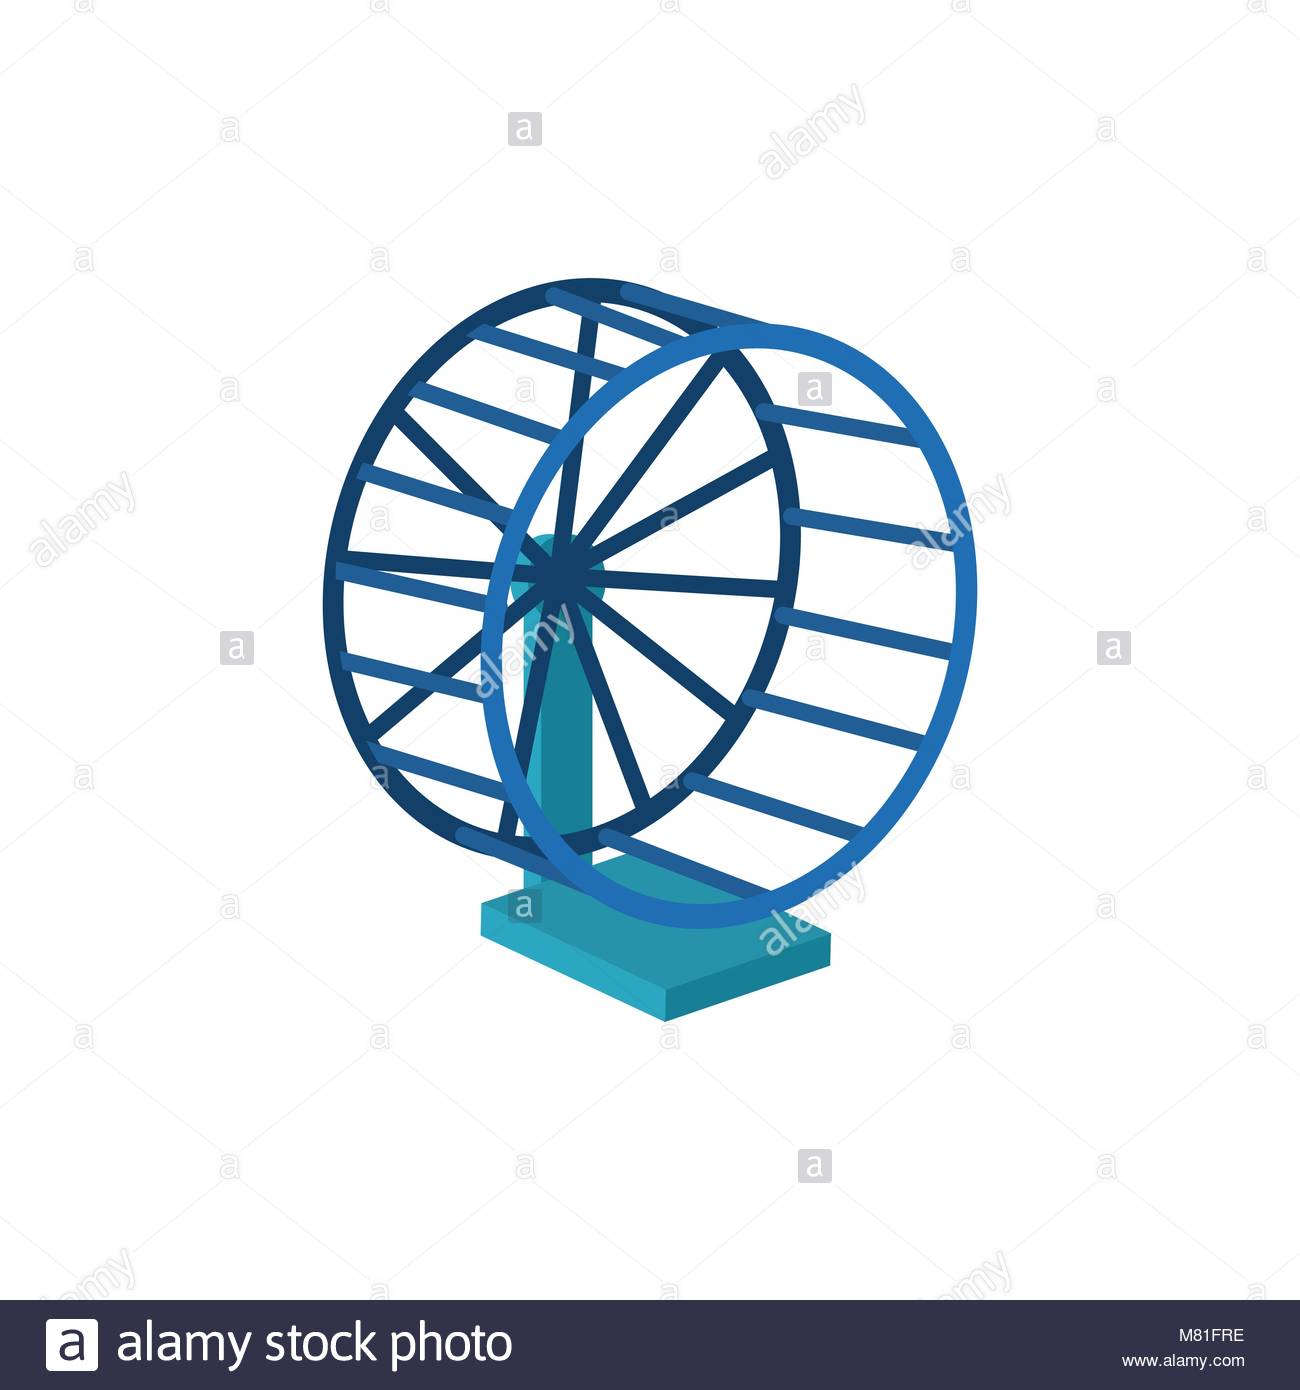 Hamster-wheel icons | Noun Project